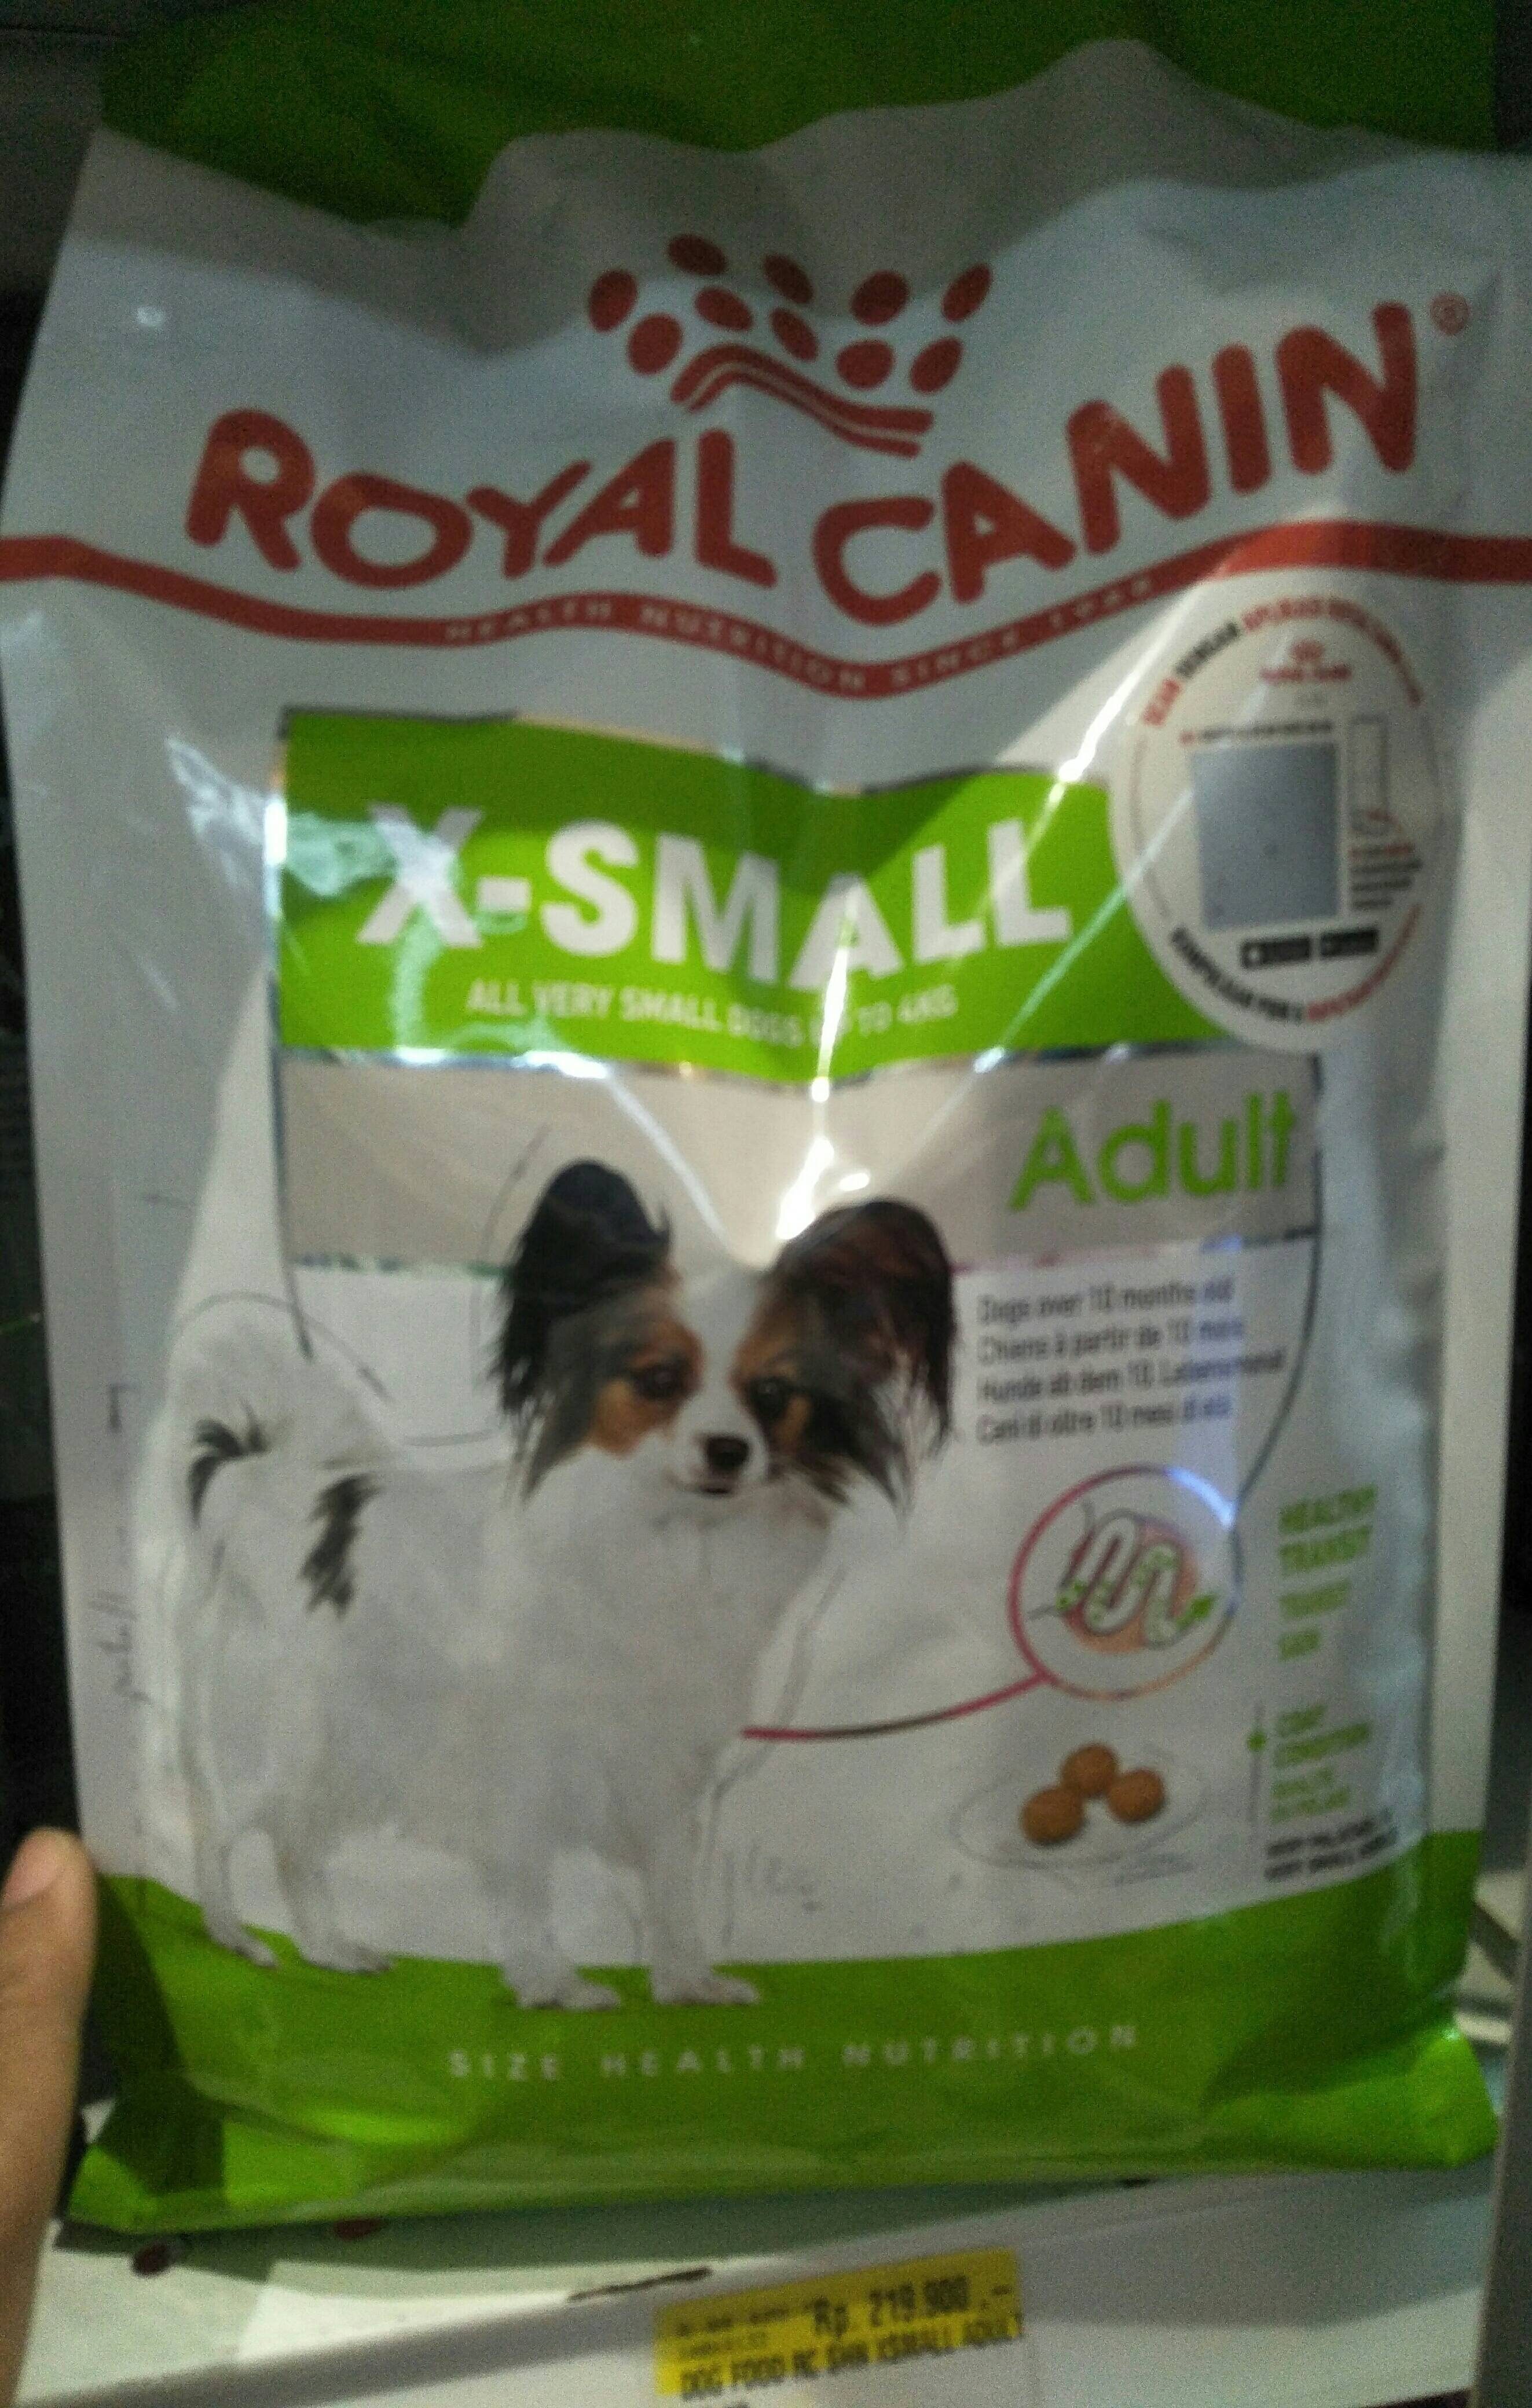 ROYAL CANIN XSMALL ADULT - Product - en